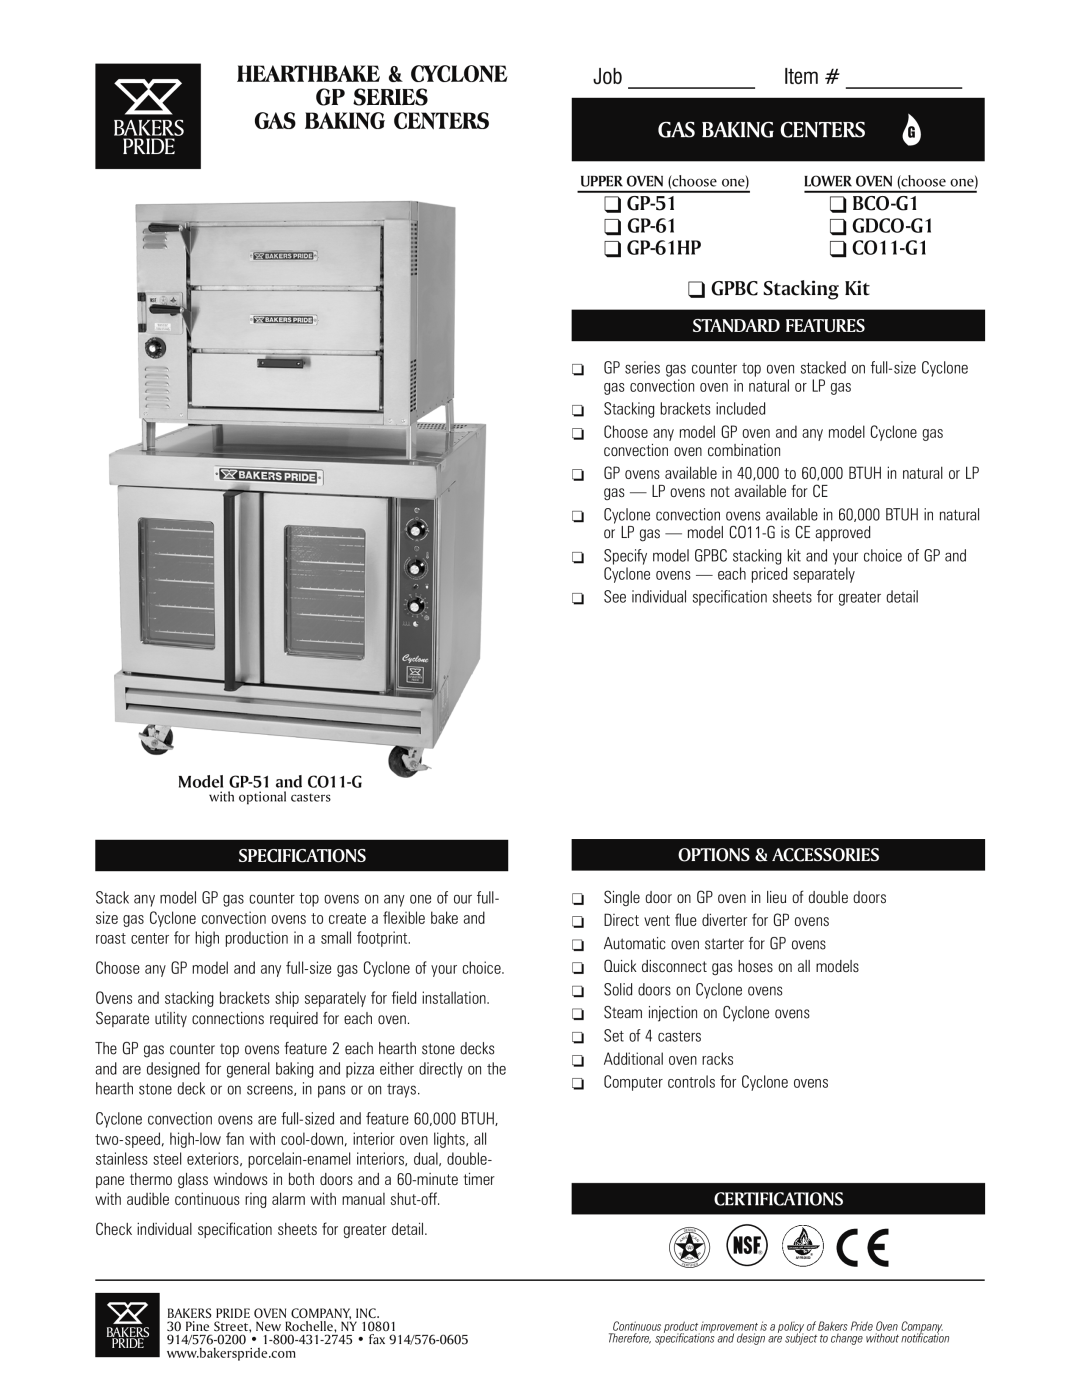 Bakers Pride Oven GP-61 specifications Hearthbake & Cyclone Gp Series, Bakers Gas Baking Centers Pride, Job, Item #, GP-51 